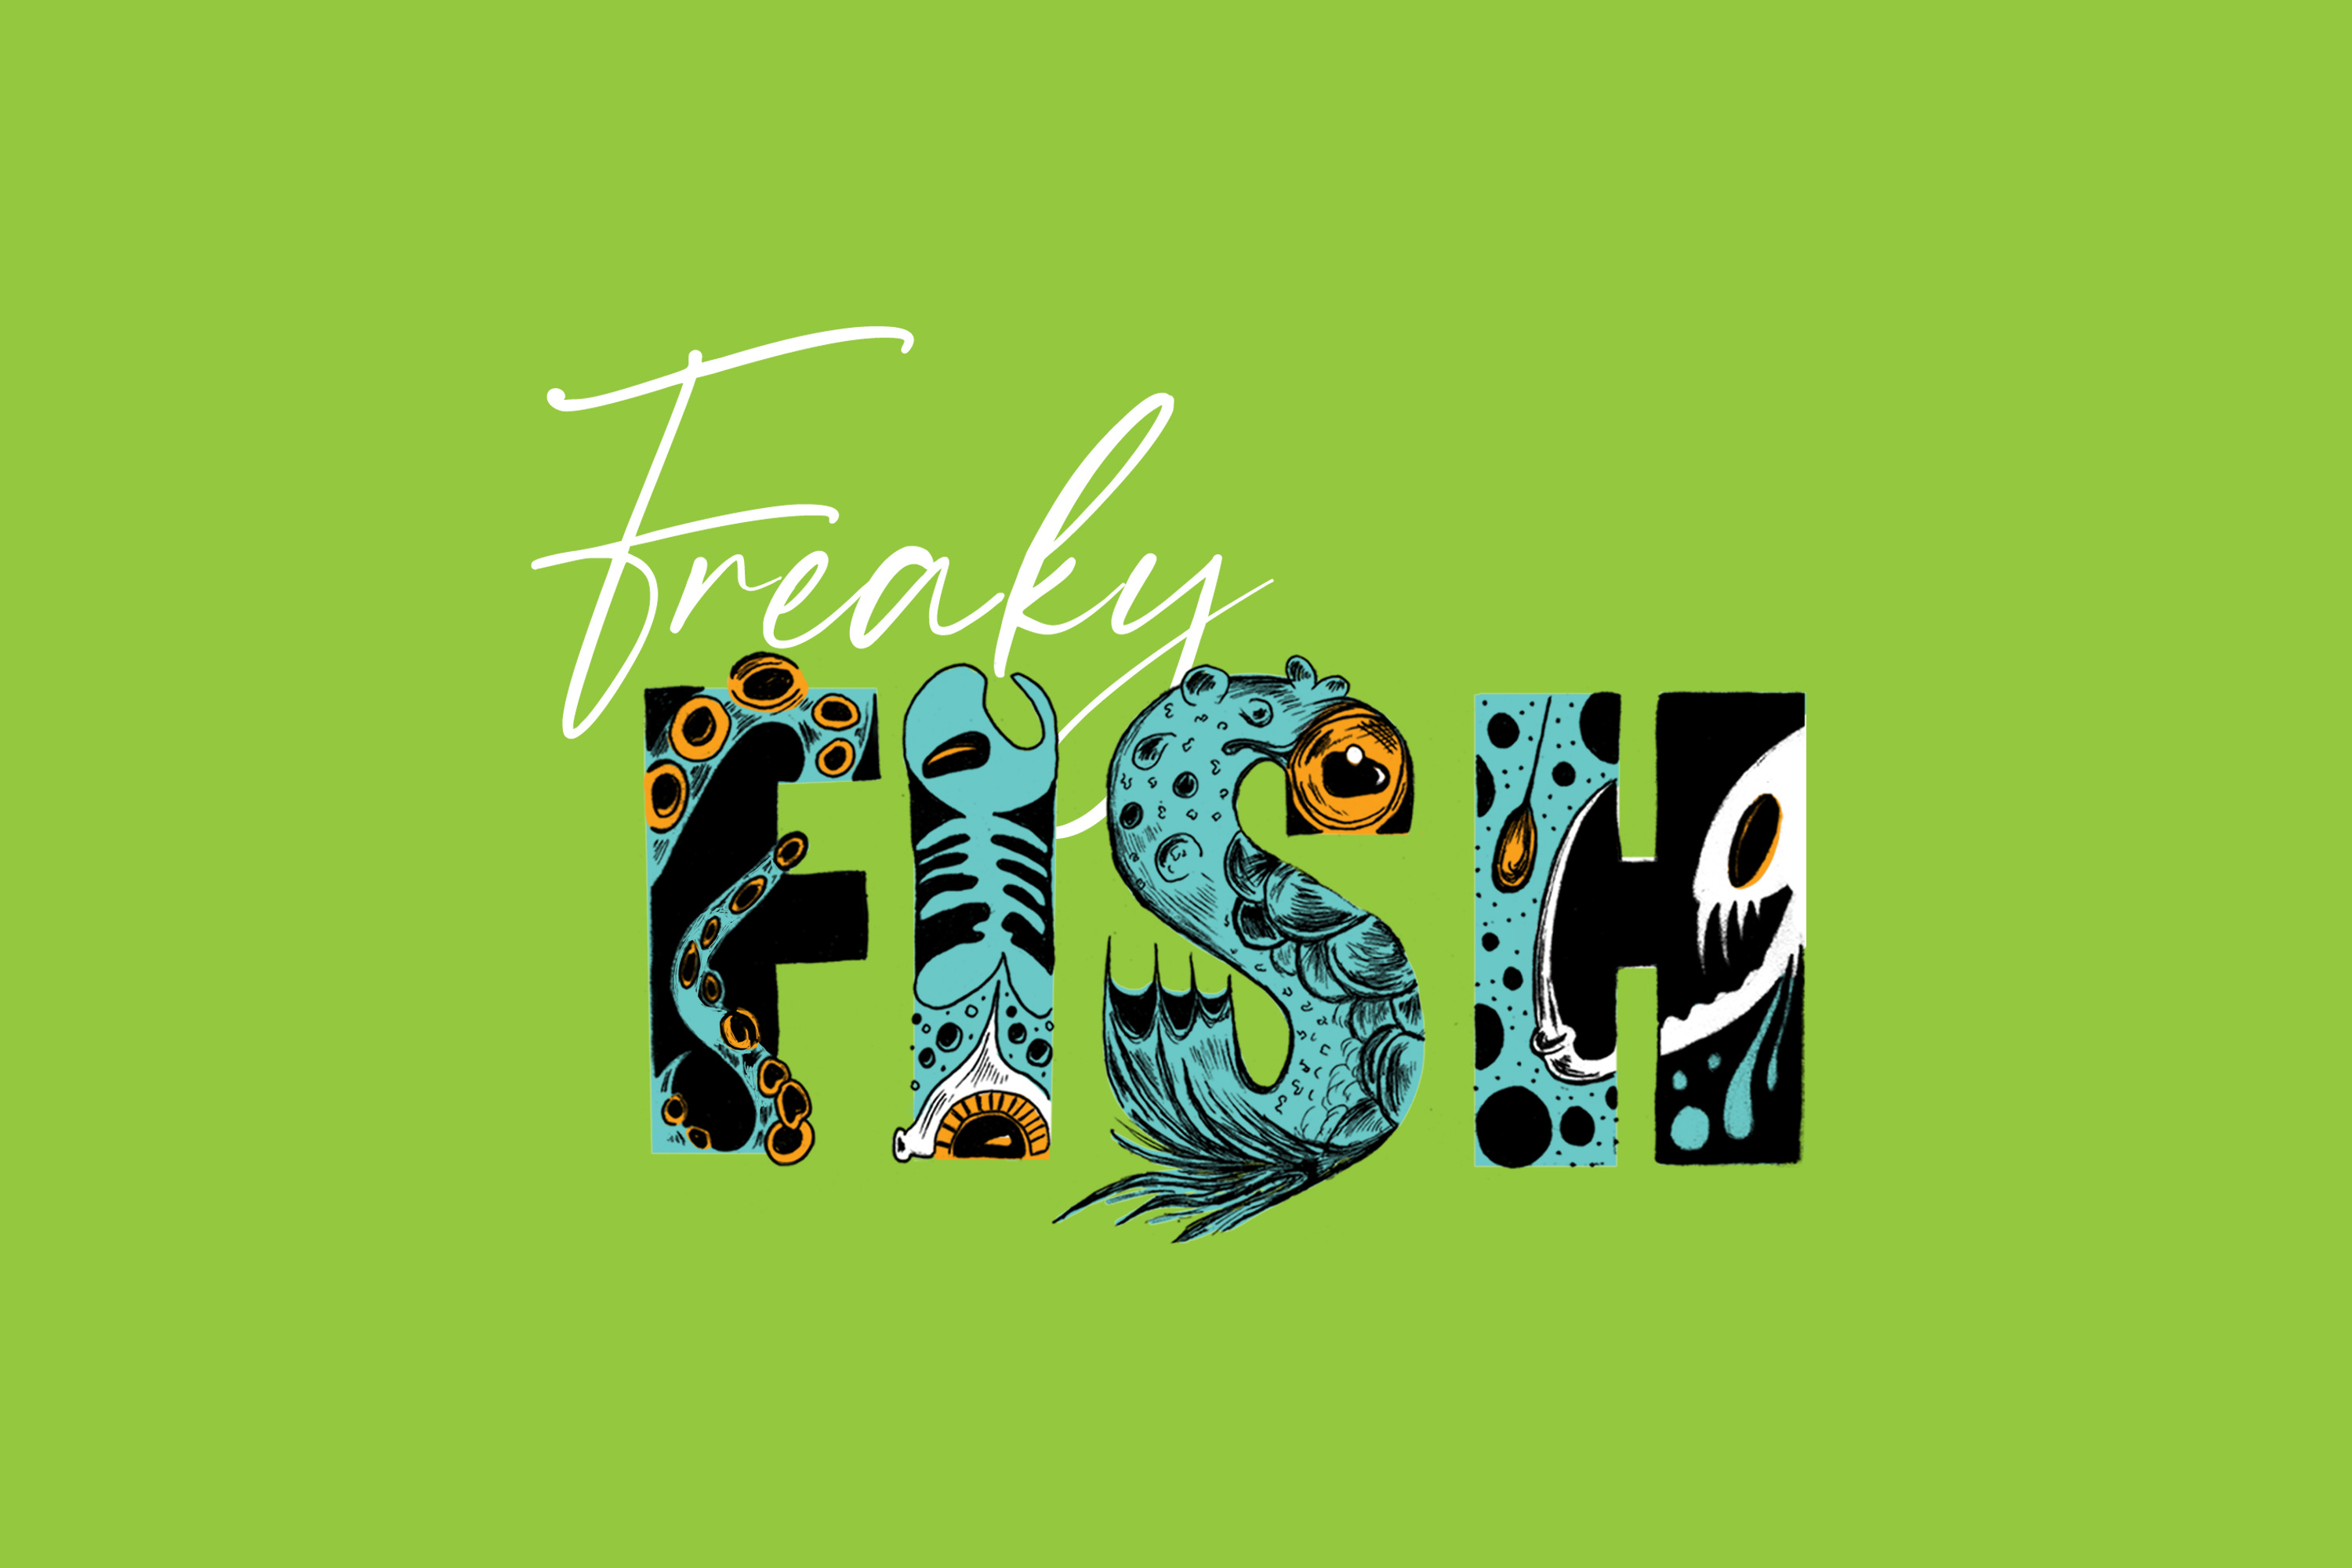 Freaky Fish Hand Lettering by Jen Borror | Hoot Design Studio on Dribbble